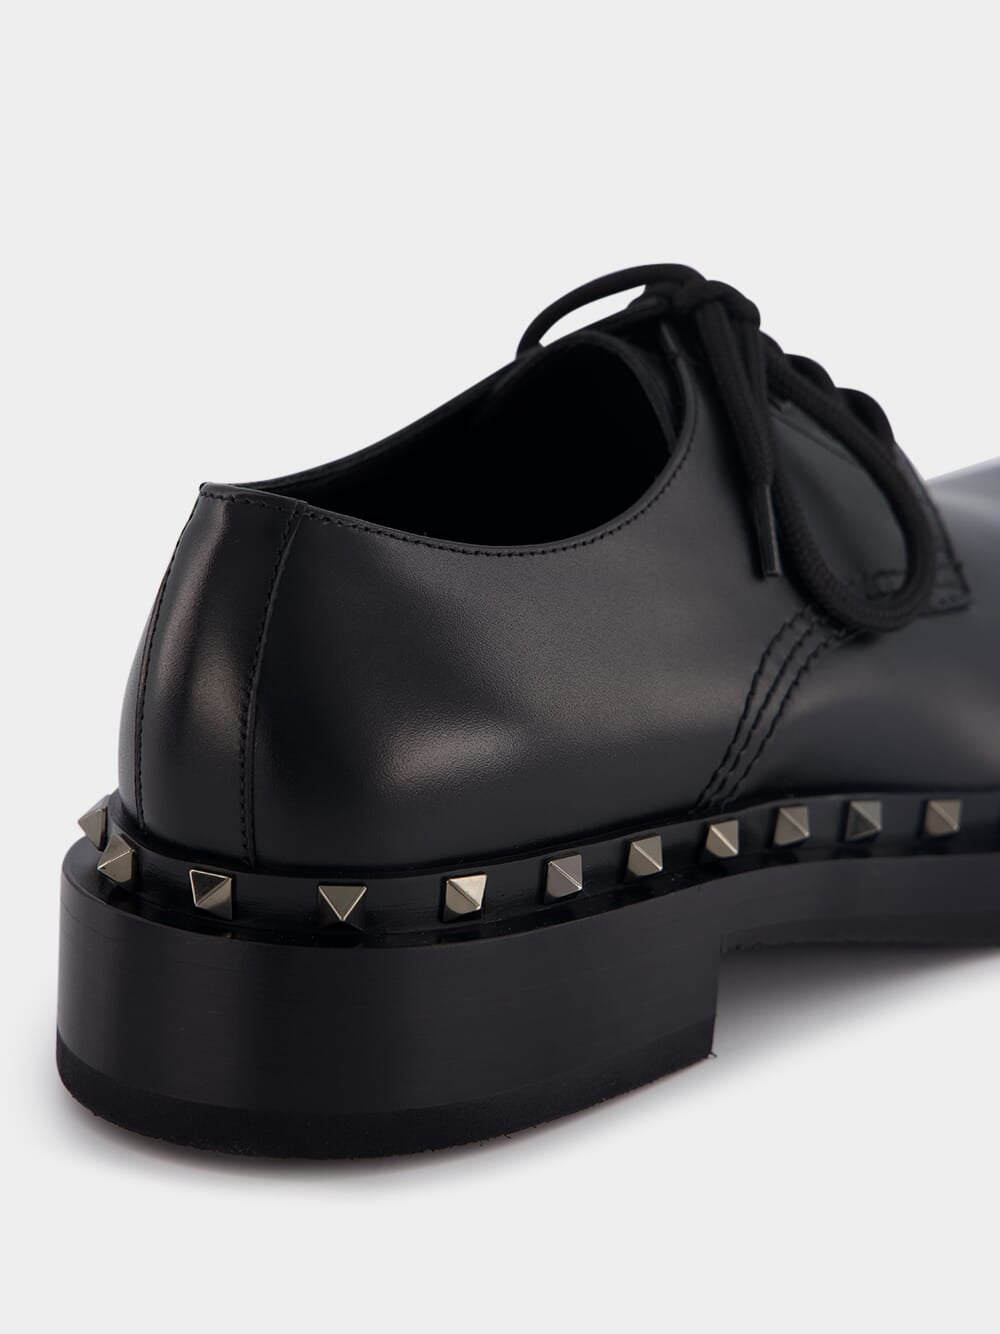 Valentino GaravaniM-Way Rockstud Leather Derby Shoes at Fashion Clinic